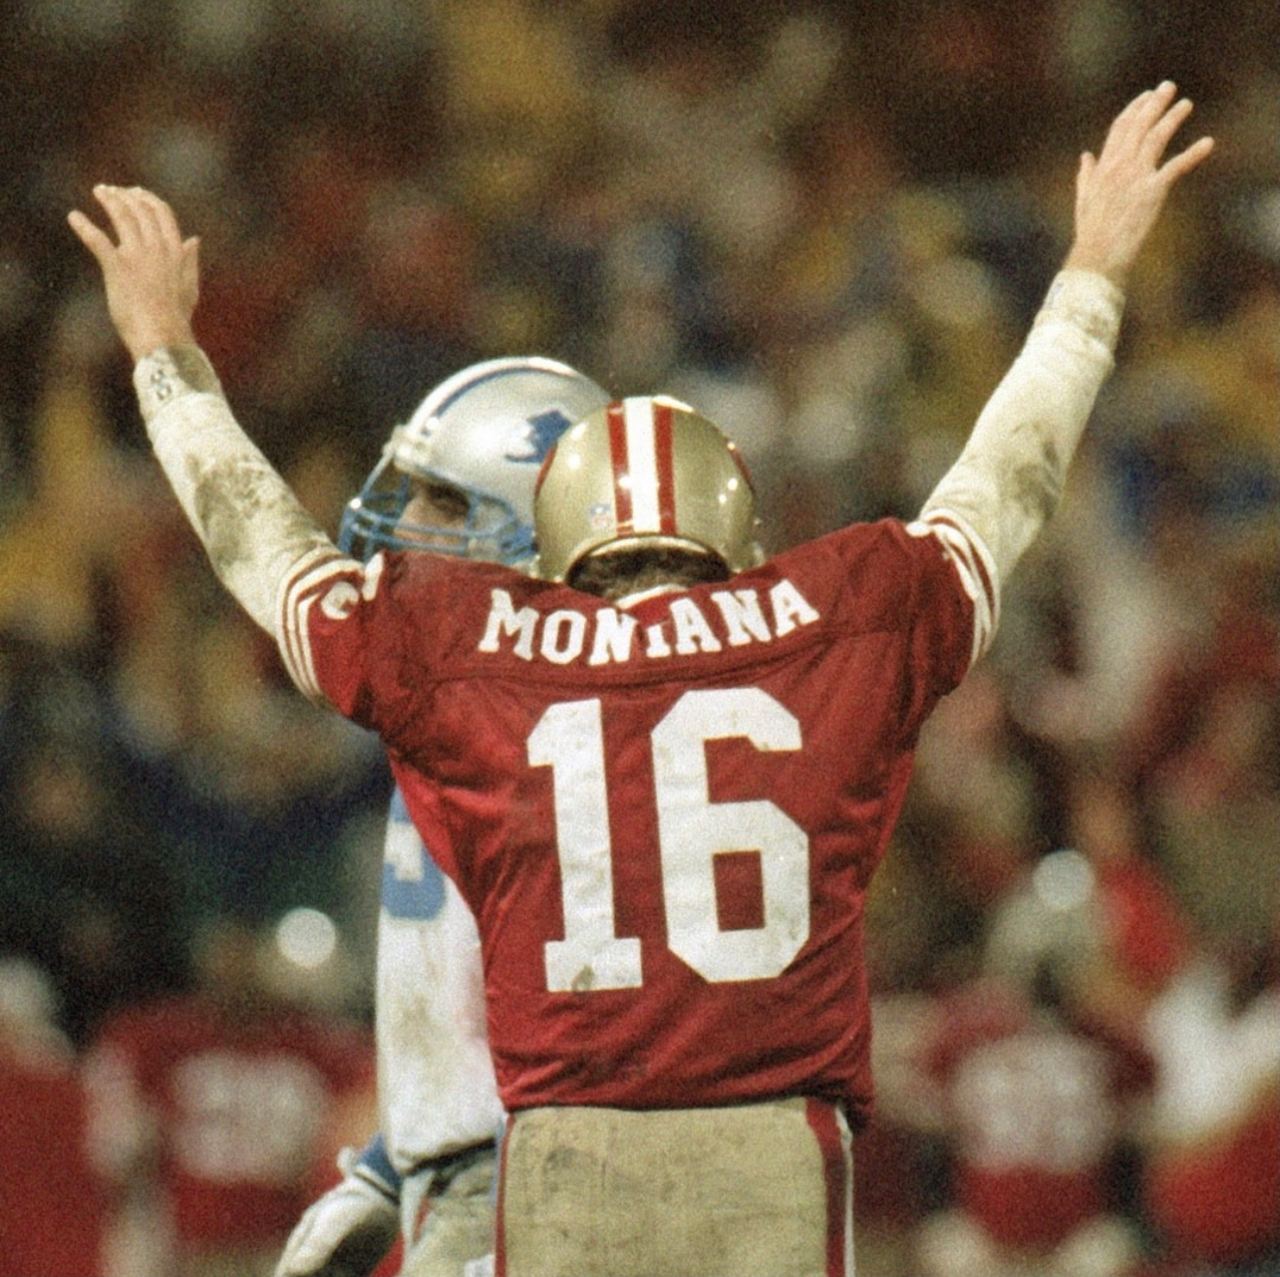 Joe Montana - One of the Greatest Quarterbacks in NFL History